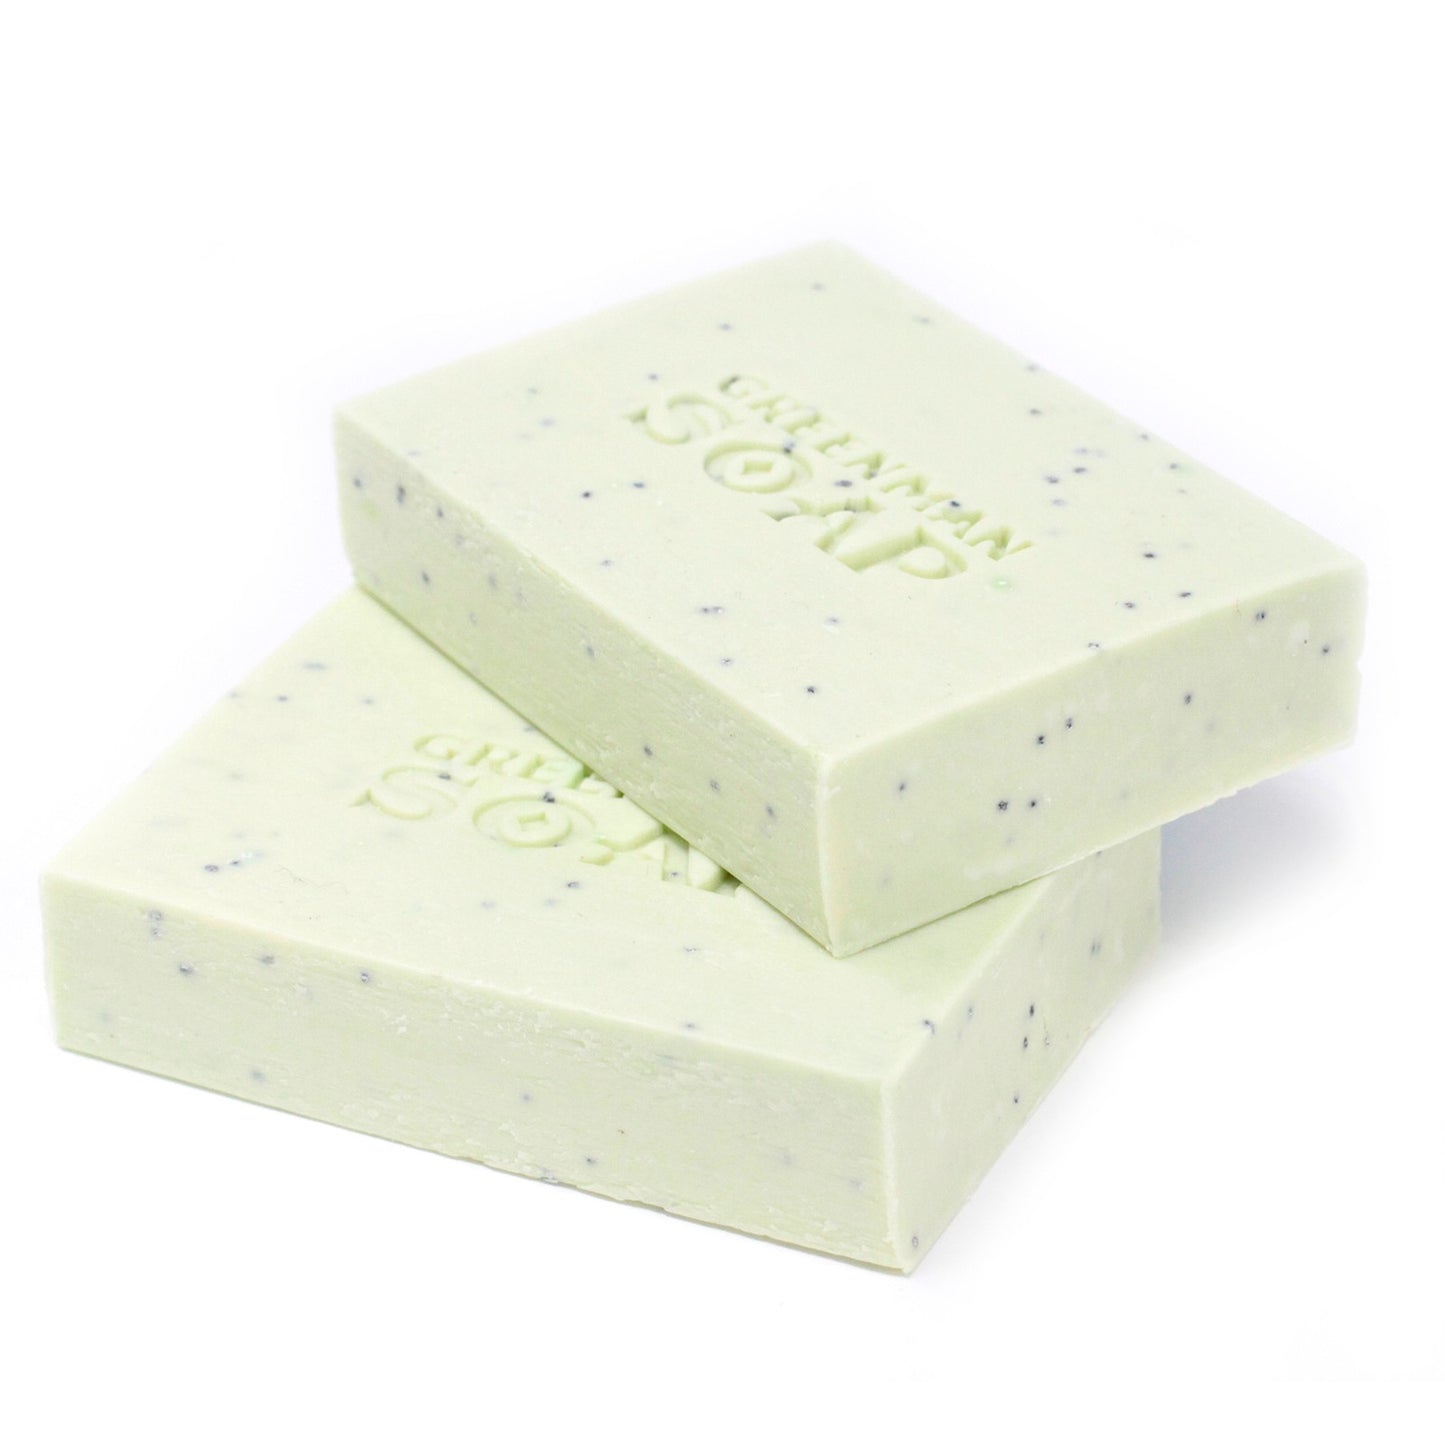 Greenman Soap Slice 100g - Antiseptic Spot Attack -Tea Tree & Peppermint